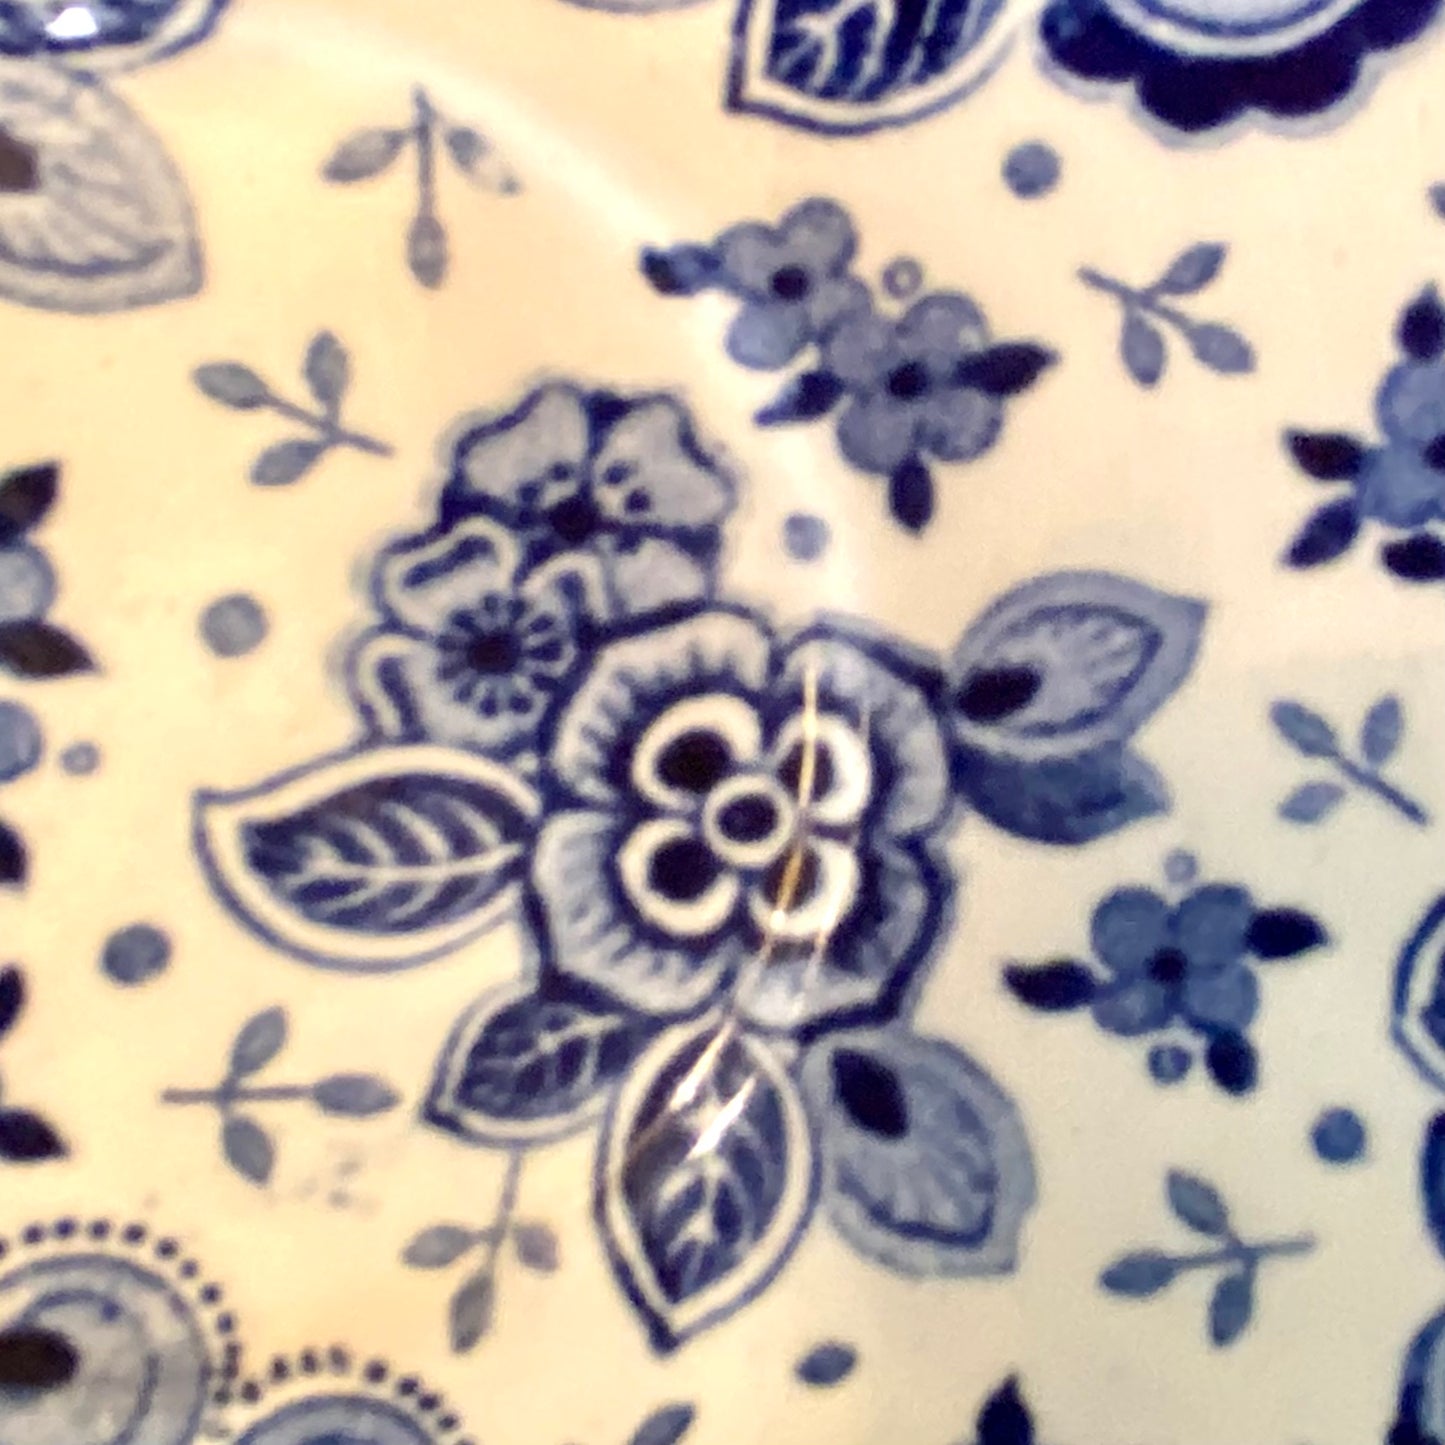 Set of 4 vintage floral blue and white saucer plates